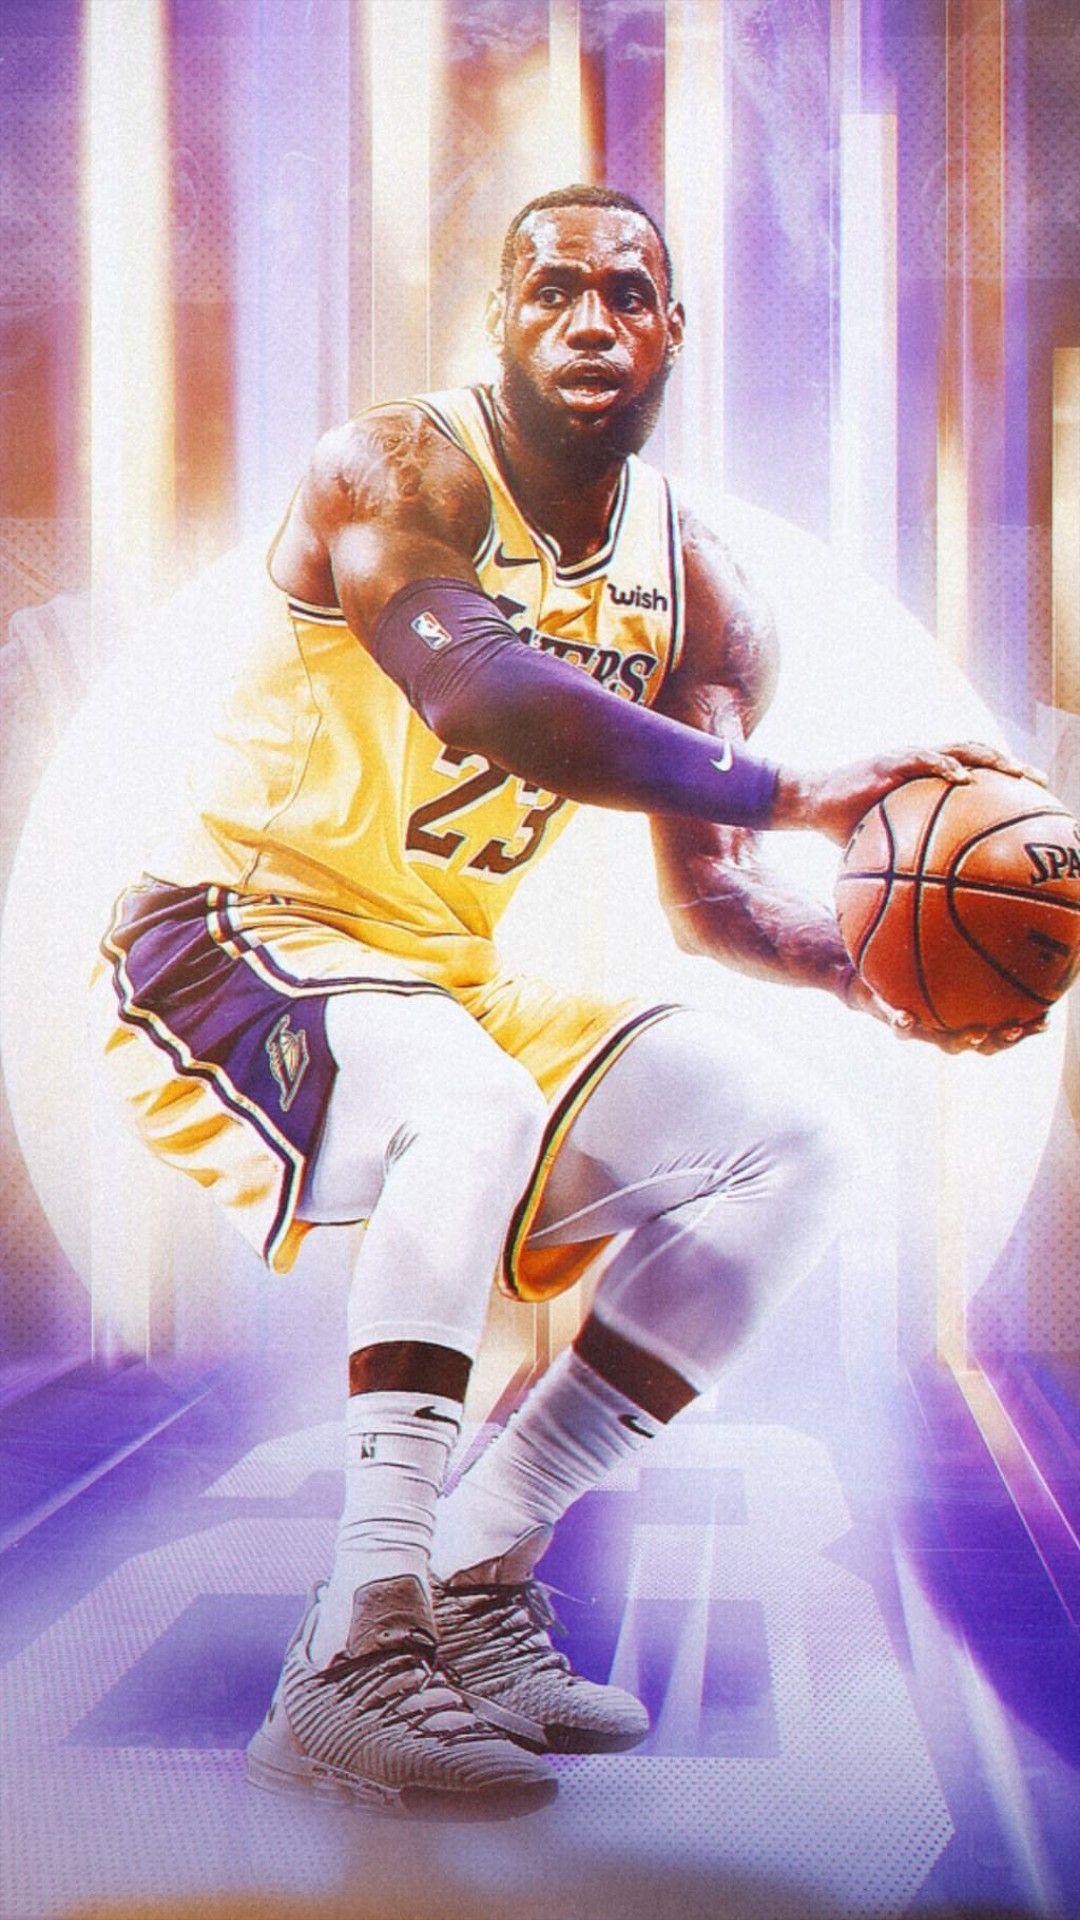 American Basketball Los Angeles Lakers NBA Nike HD LeBron James Wallpapers   HD Wallpapers  ID 78828